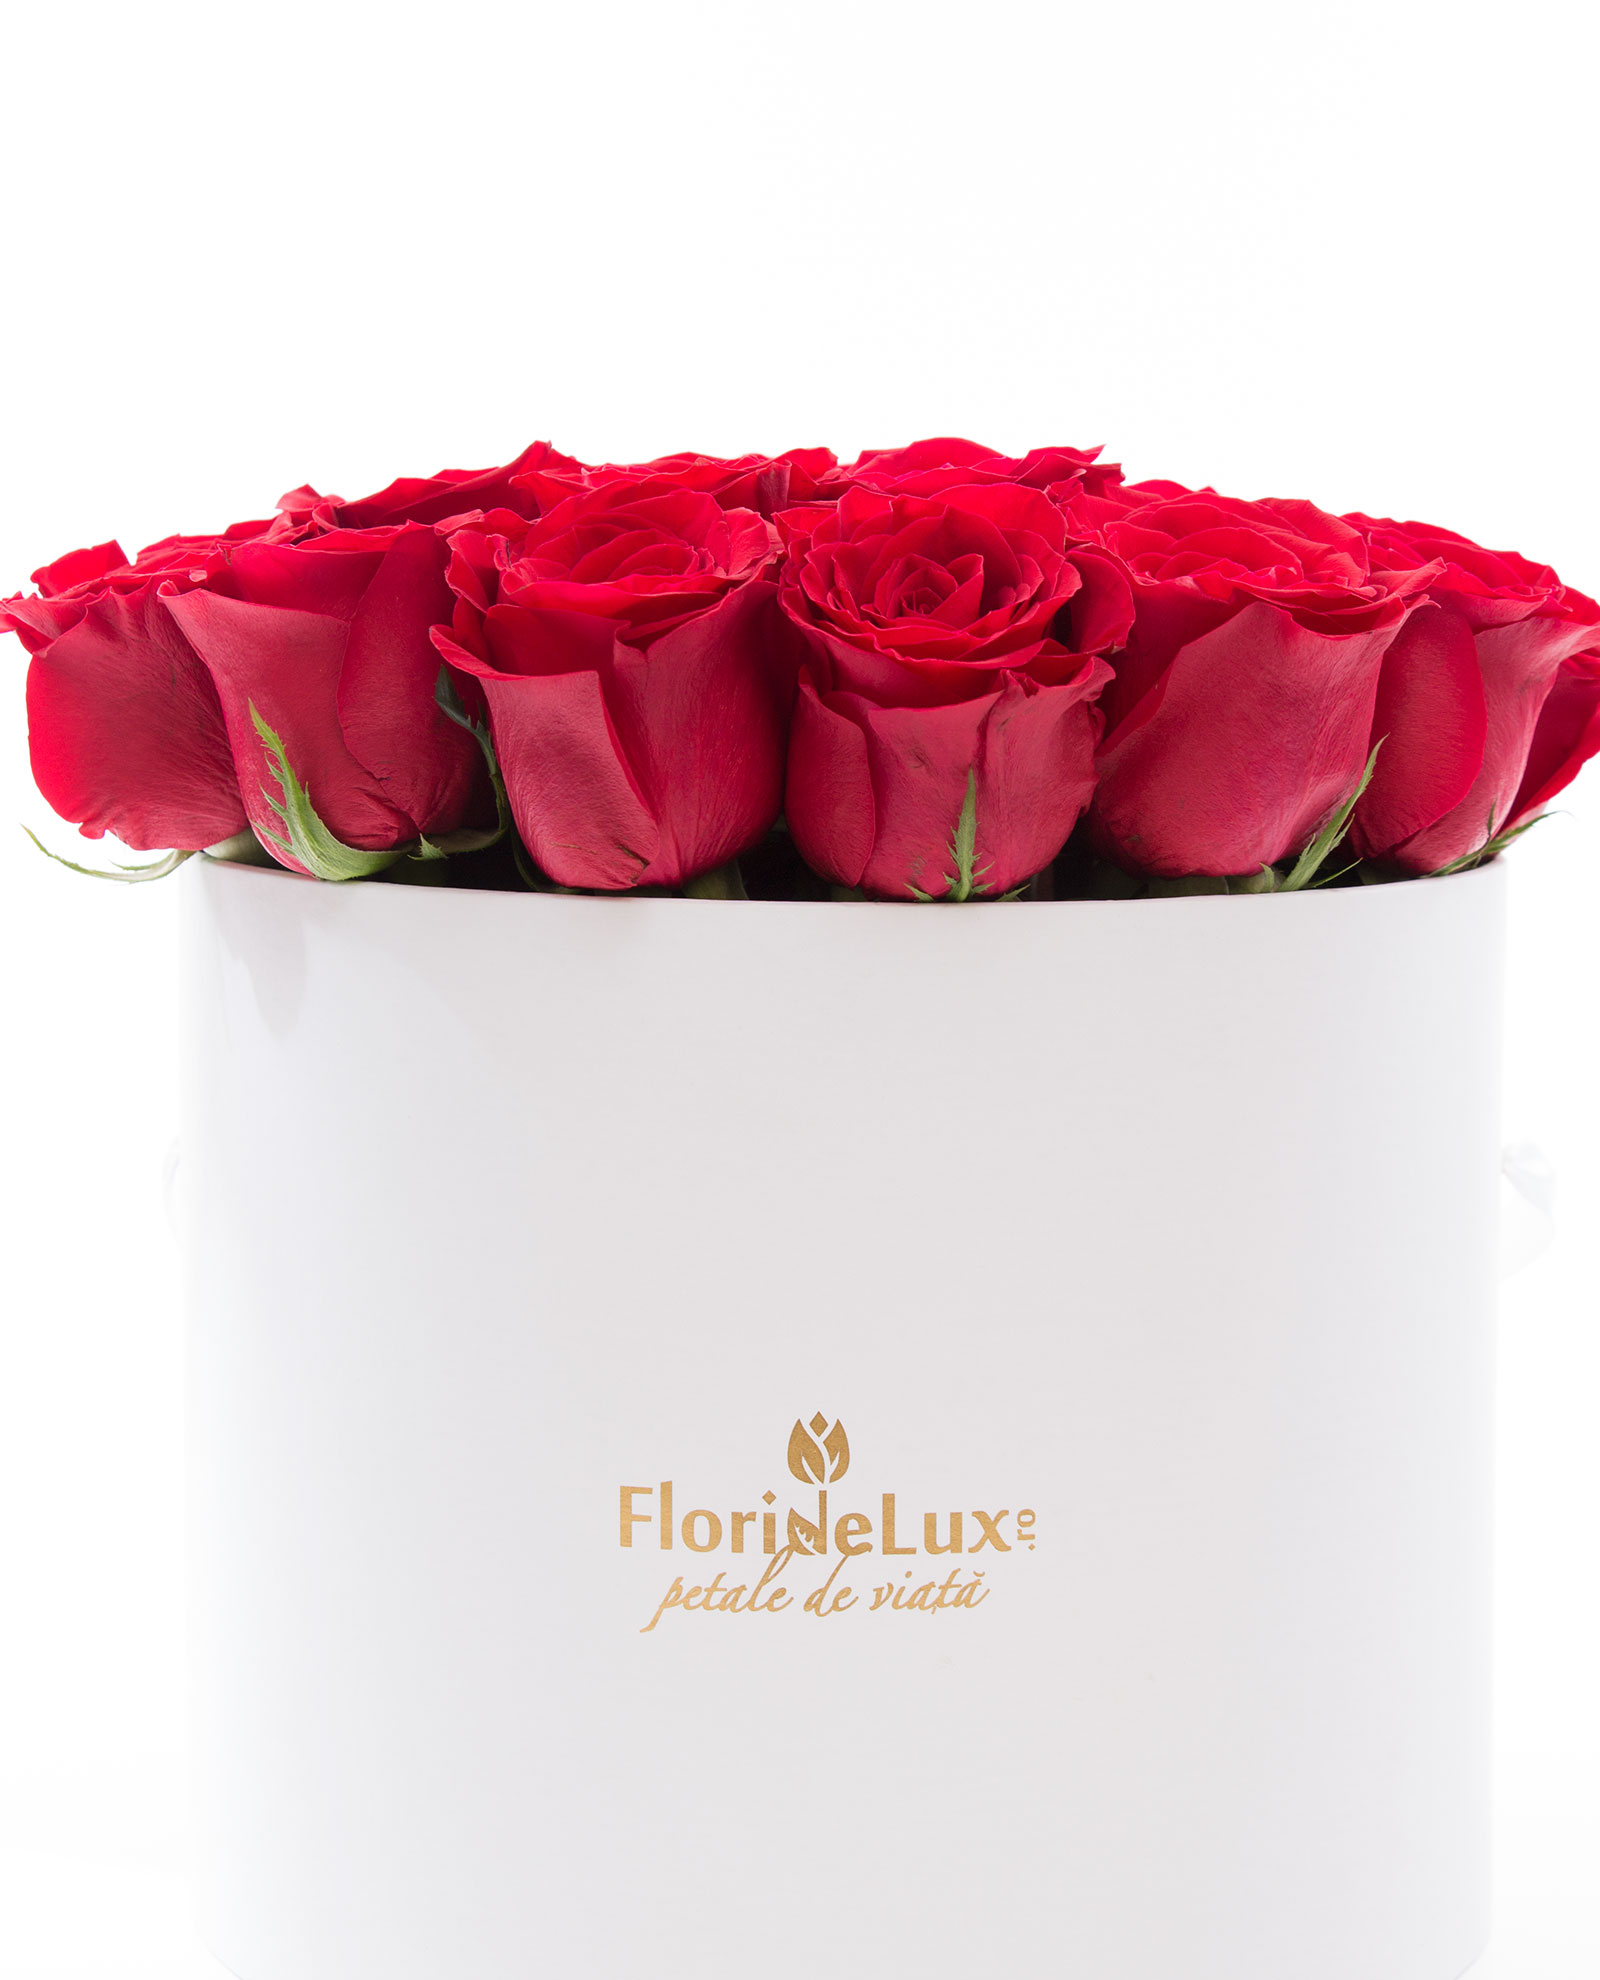 Cutie romantica trandafiri rosii si Corton Charlemagne